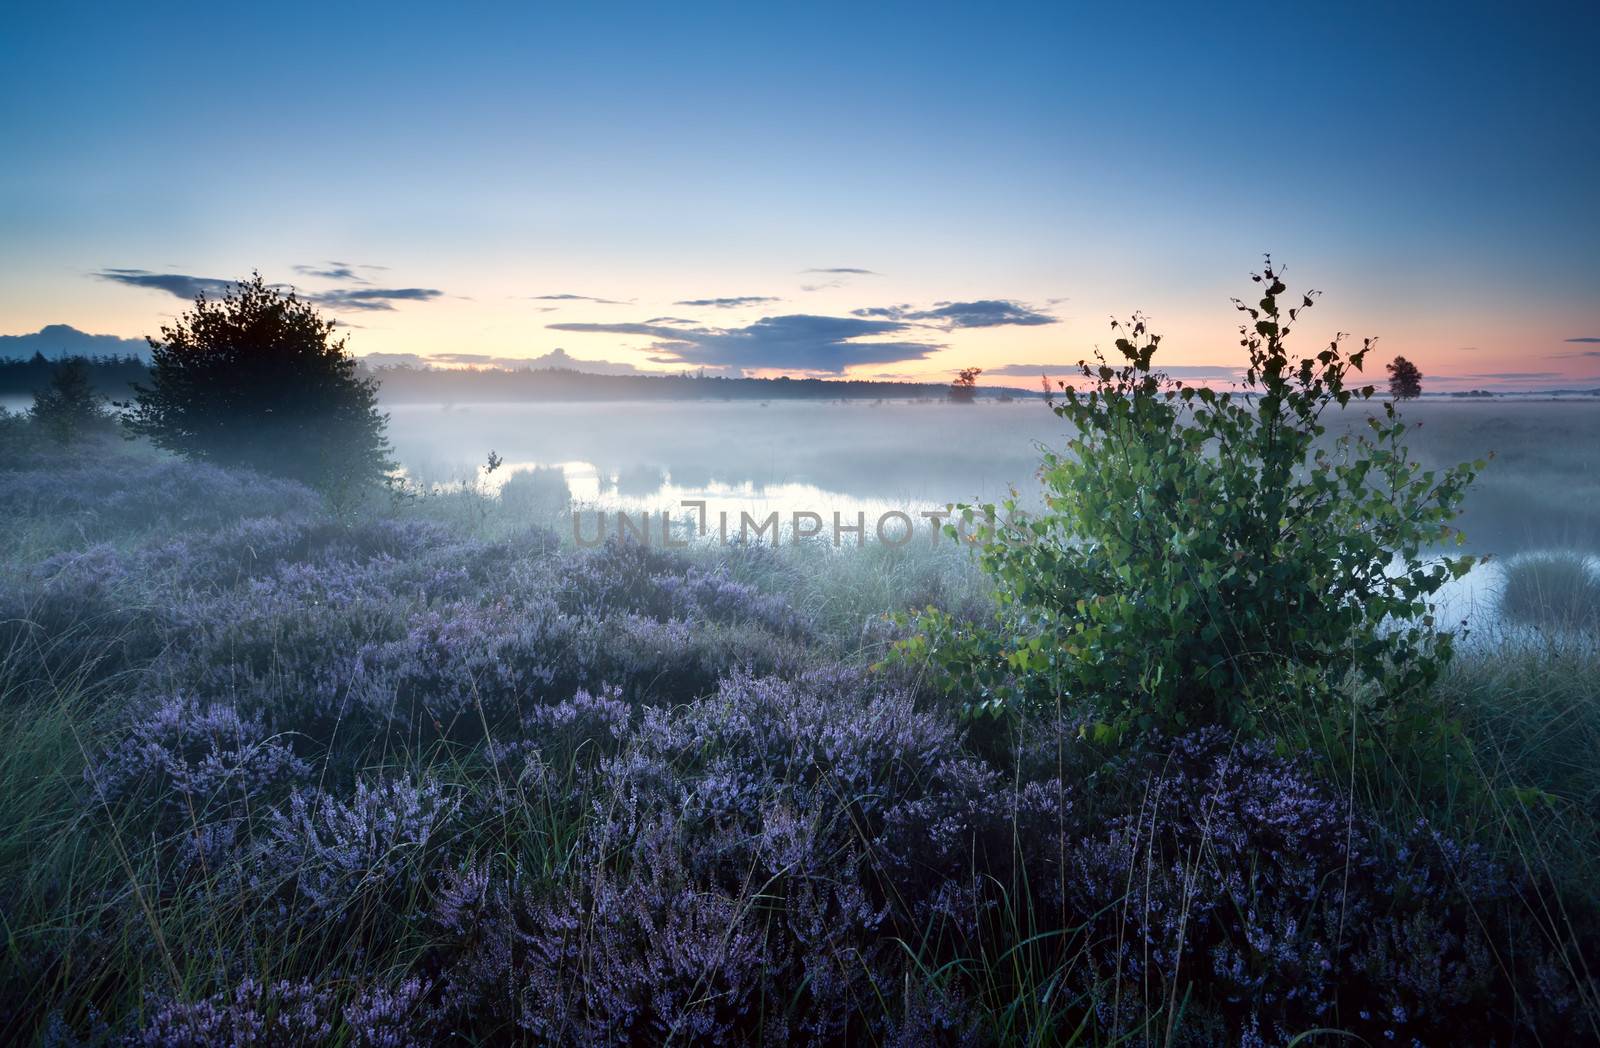 misty morning over swamp with flowering heather, Fochteloerveen, Netherlands